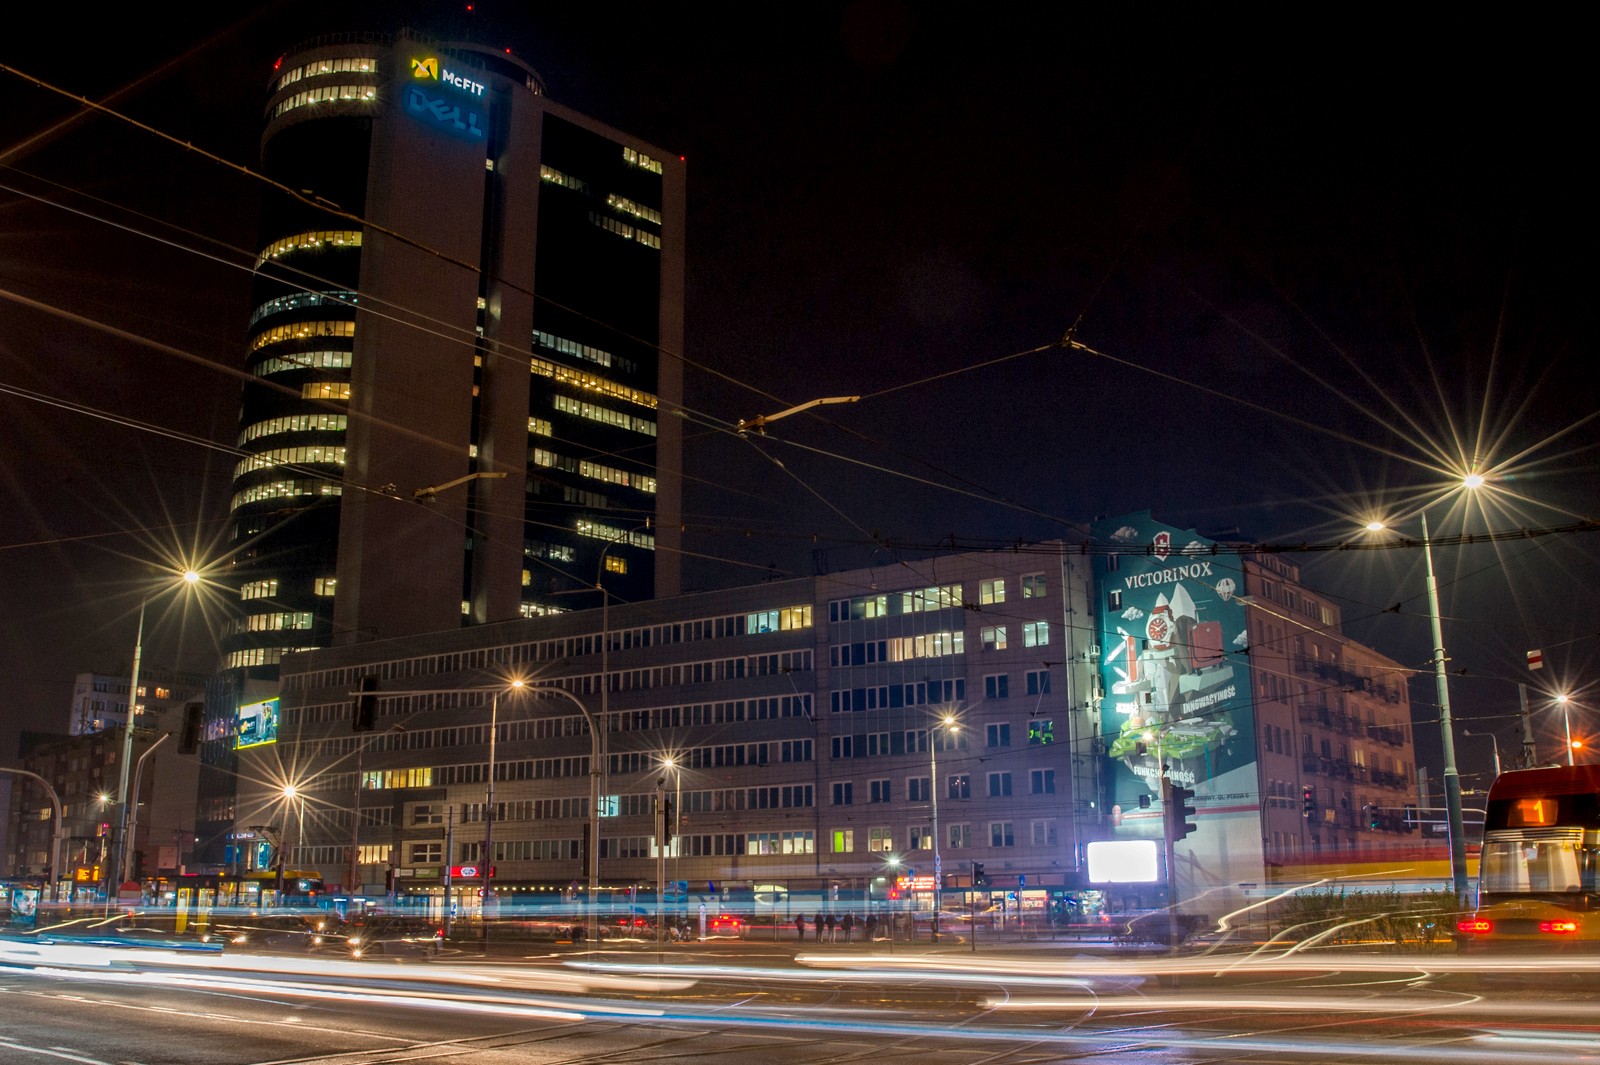 A night view of Plac Zawiszy with a painted advertisement mural for Victorinox | Realizacja murali dla Victorinox  | Portfolio